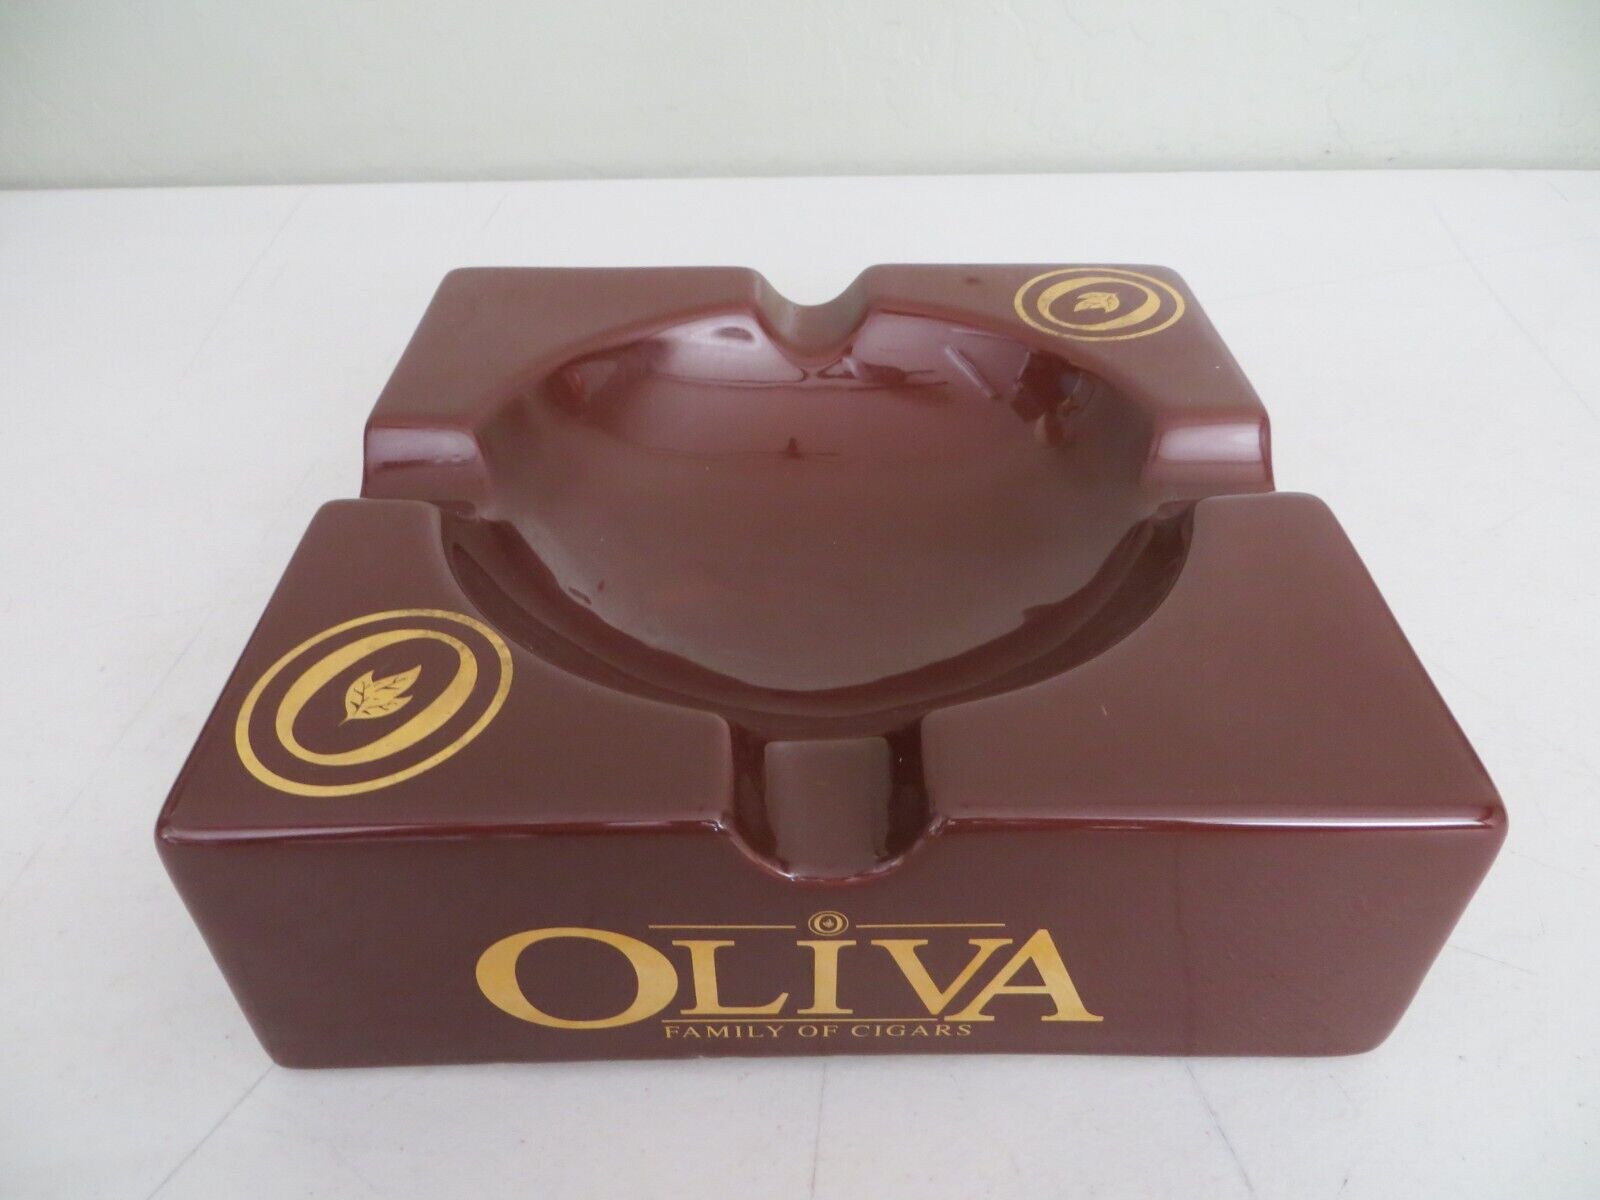 OLIVA Family of Cigars Large Ceramic Cigar Ashtray 9”x9”x3”